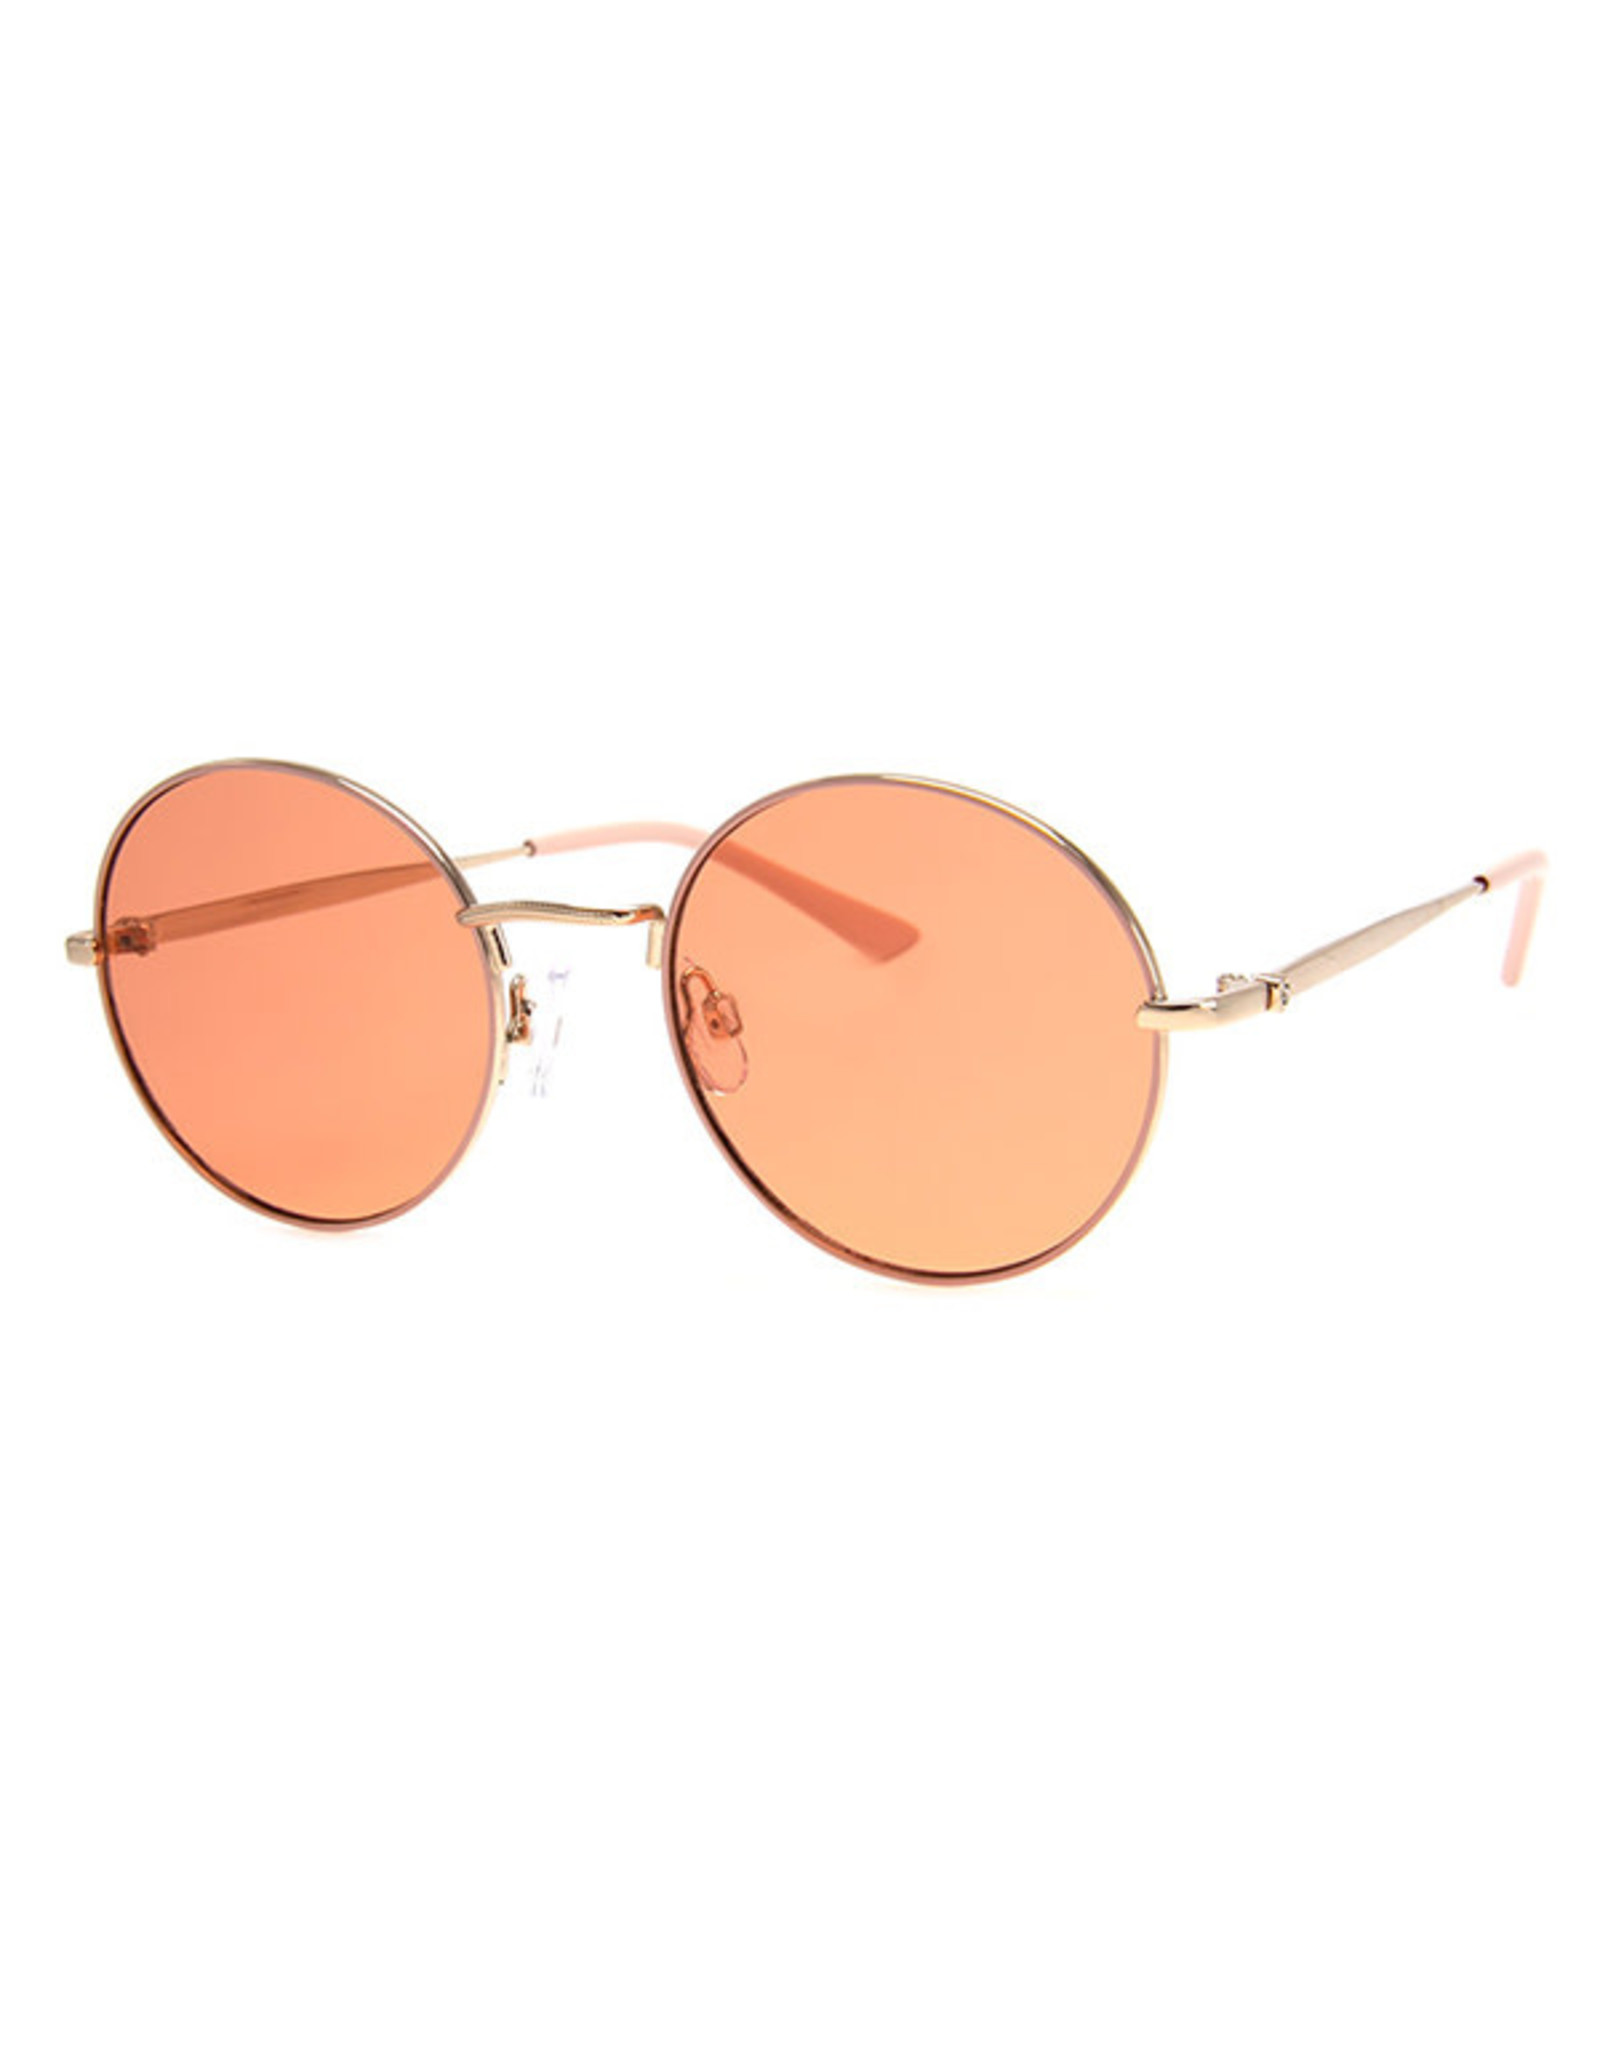 AJM - Round Colored Wire Frame Sunglasses